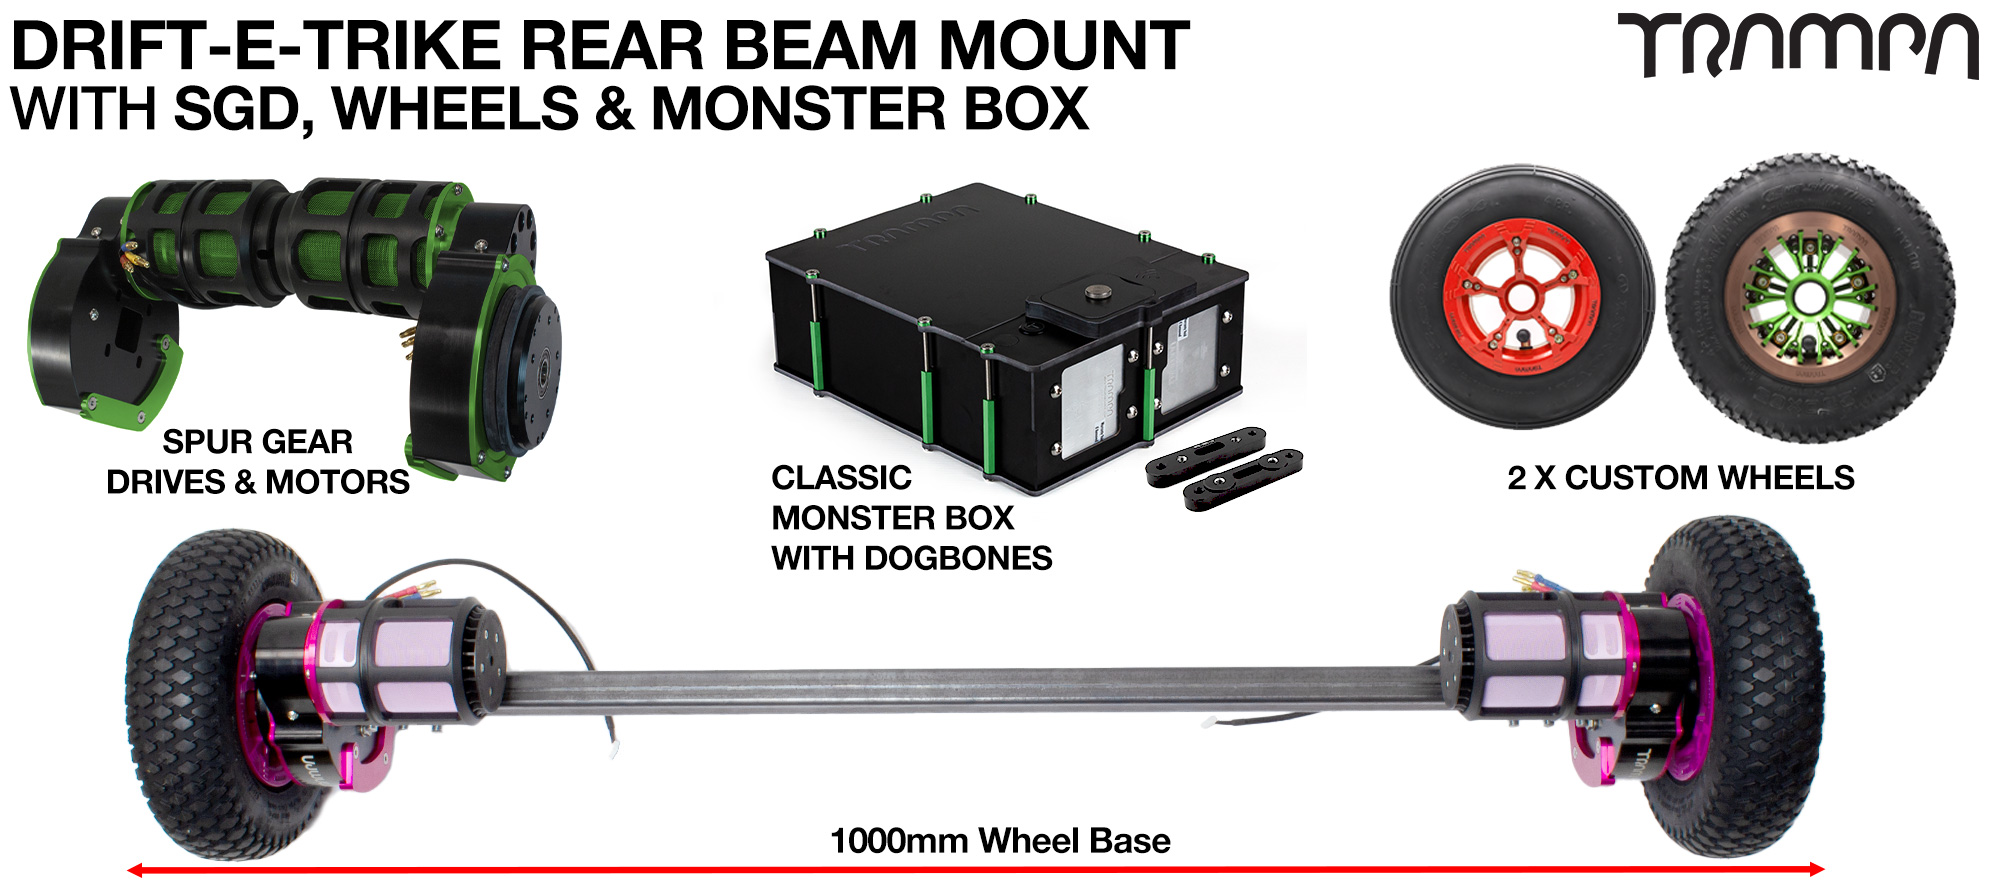 Assembled SPUR GEAR DRIVE REAR BEAM Drivetrain with 2x Rear Wheels & Battery Box